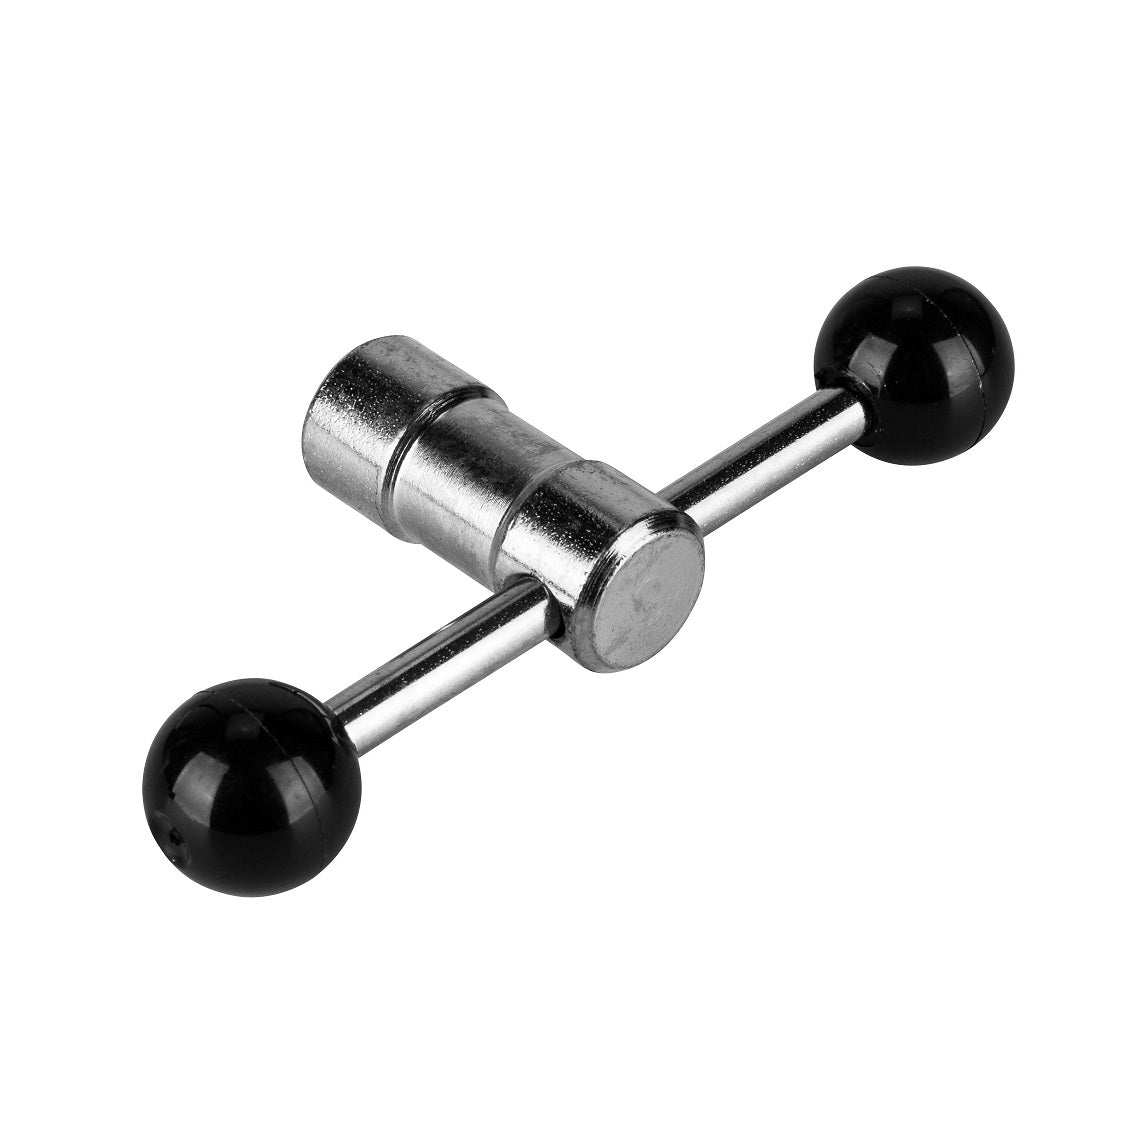 K&M t-bar screw assembly, nickel